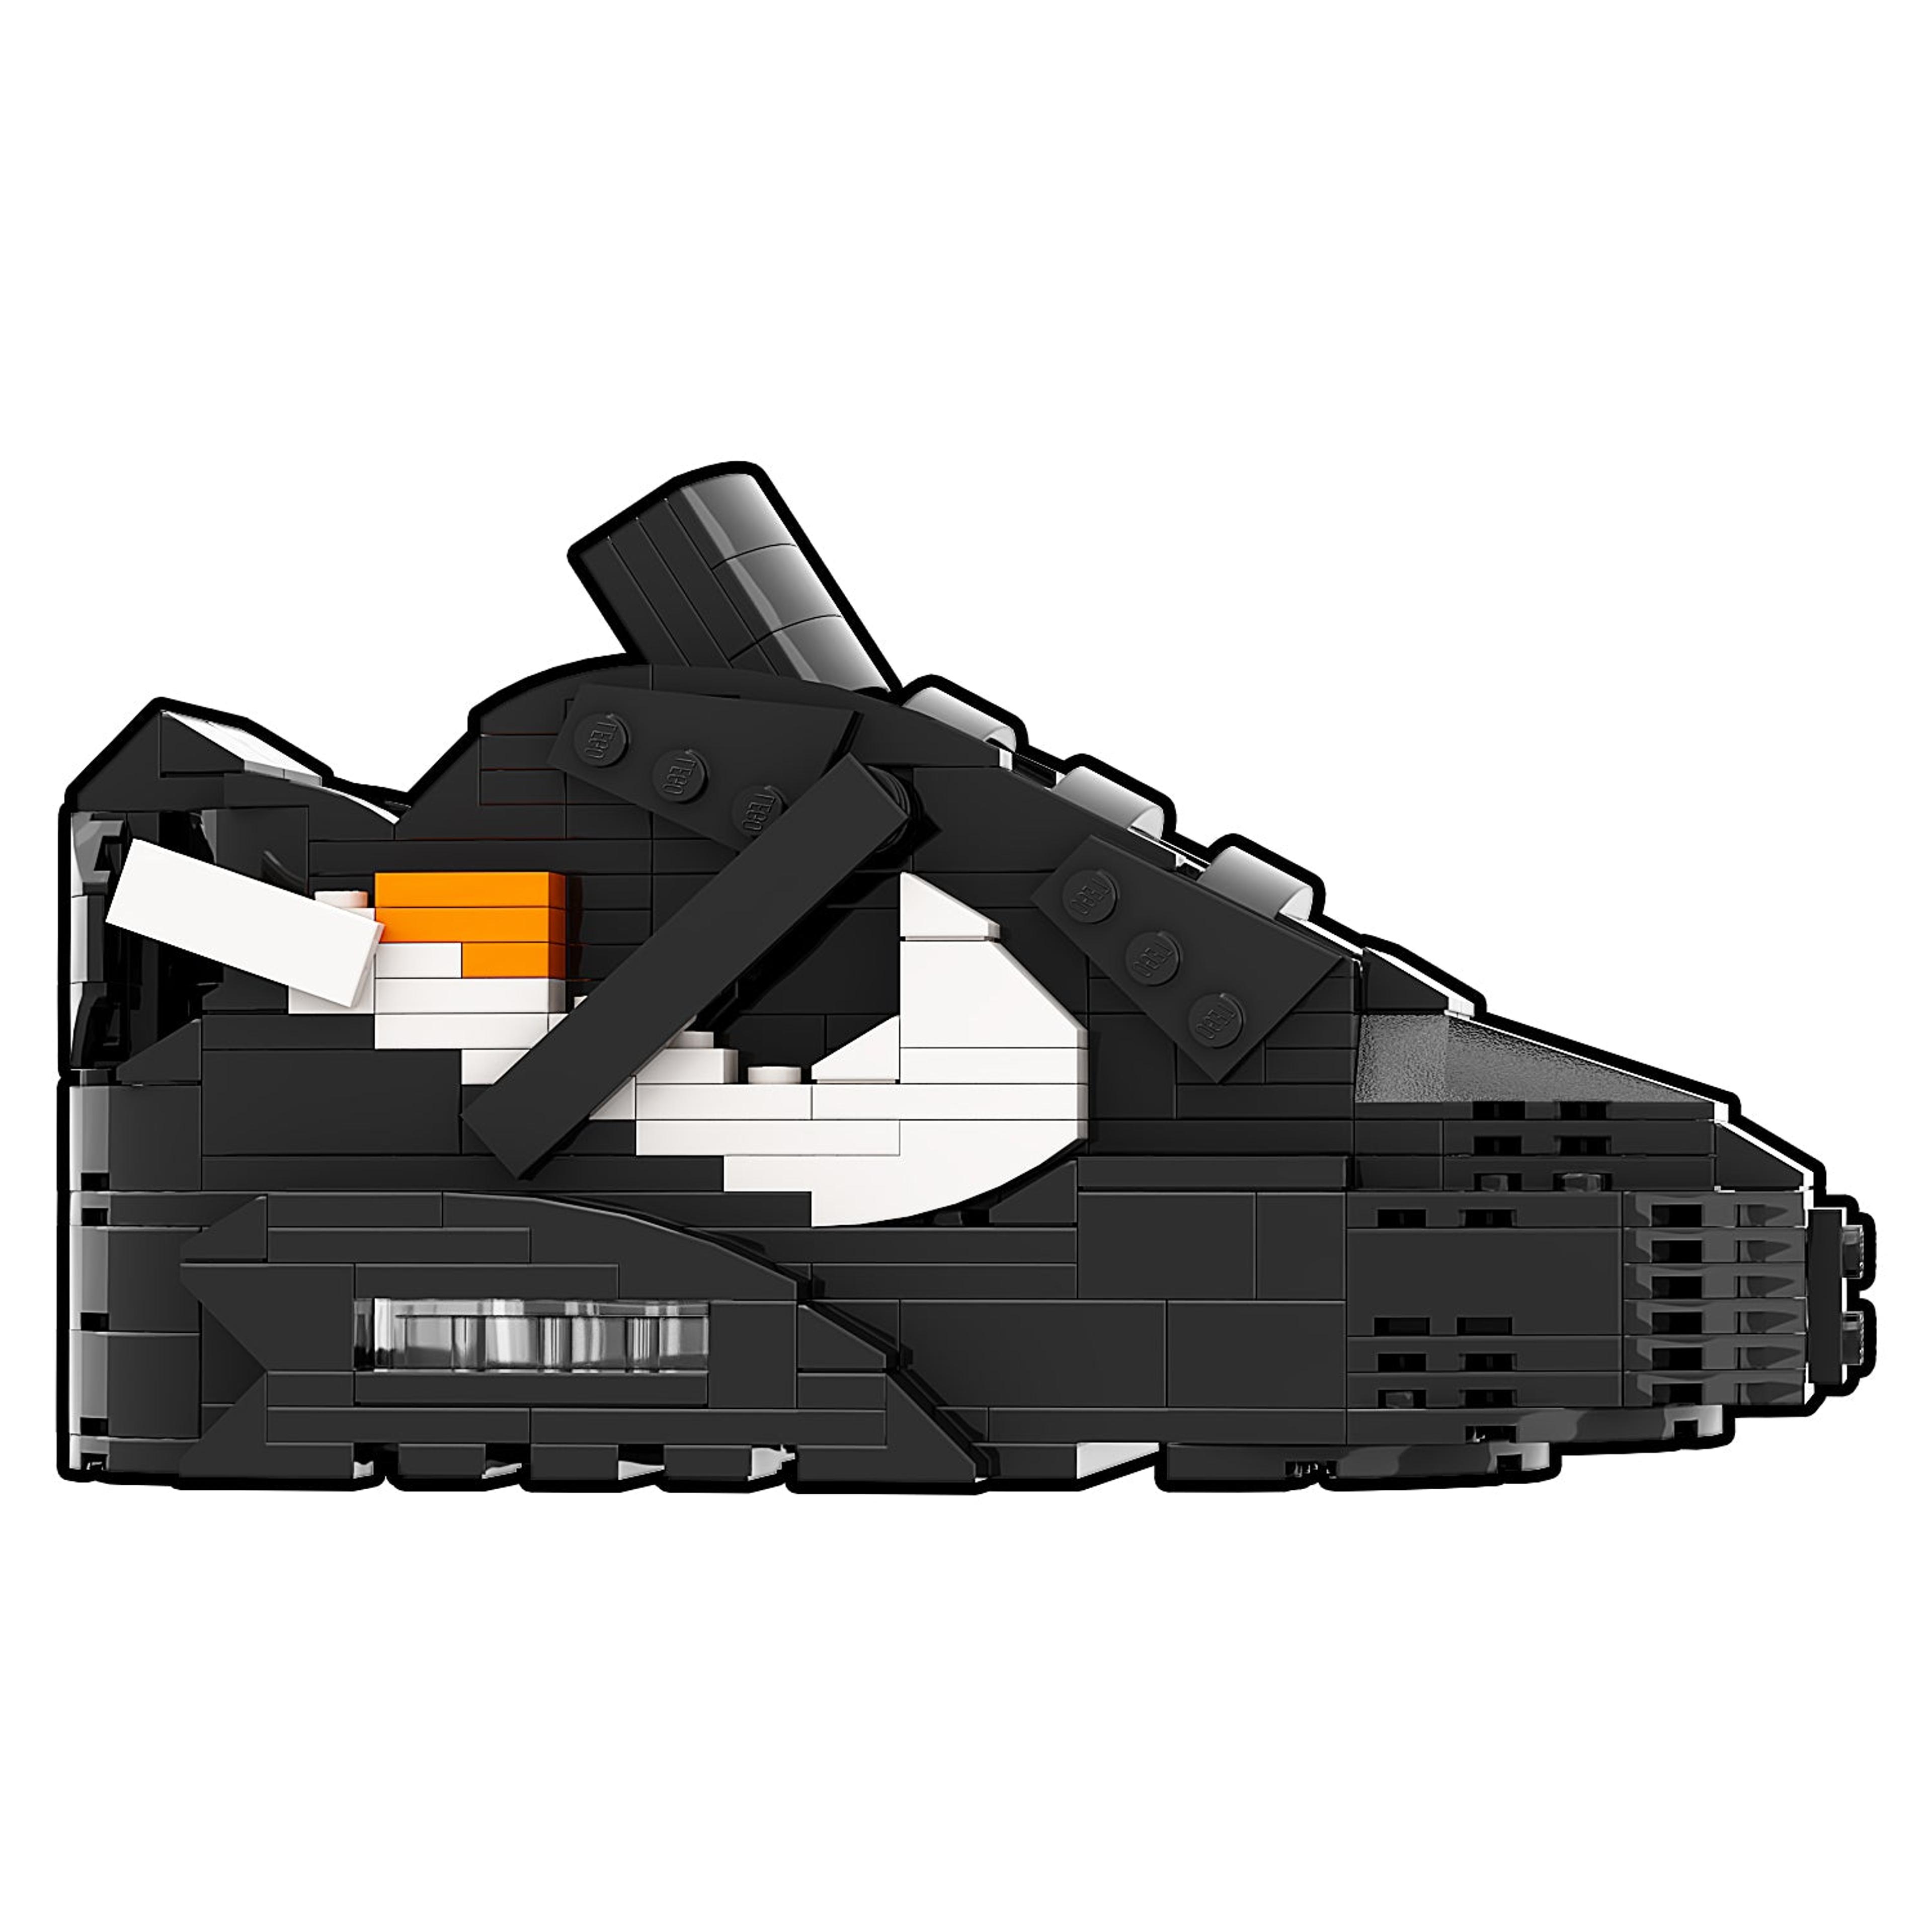 Alternate View 4 of REGULAR Air Max 90 "Off-White Black" Sneaker Bricks with Mini Fi